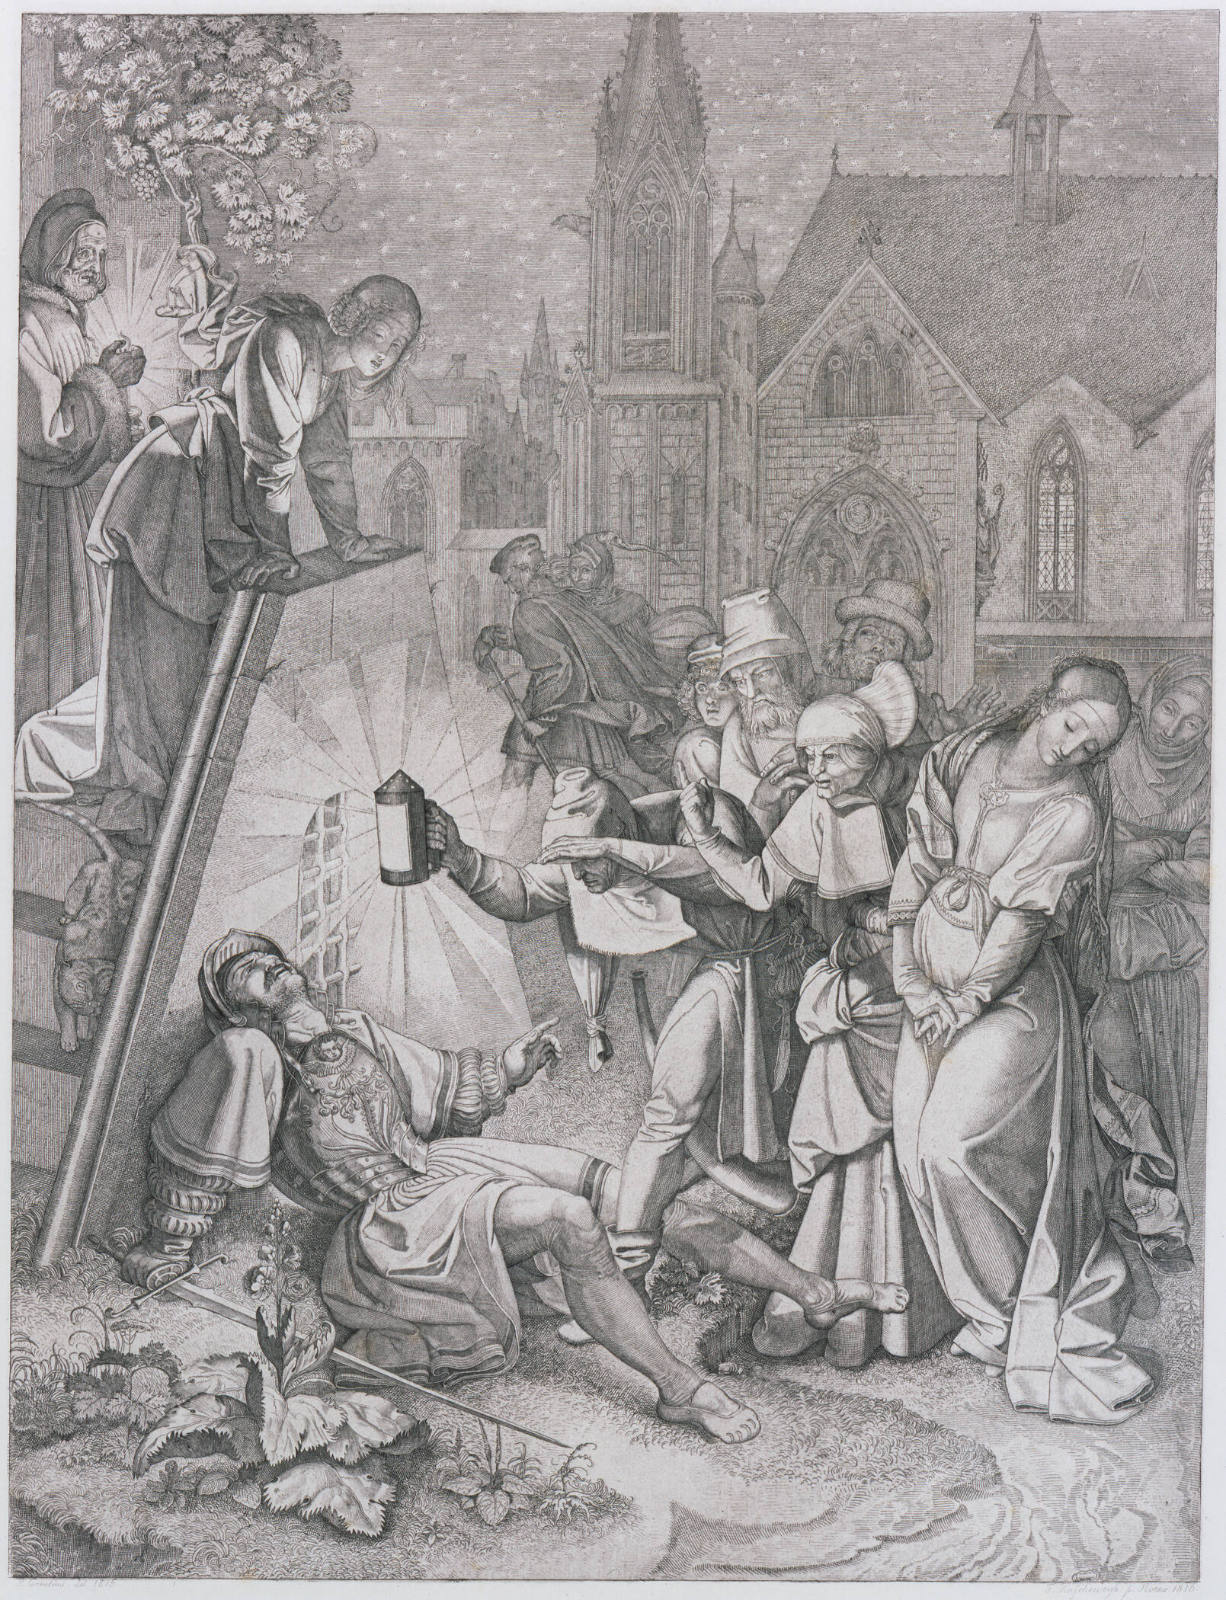 Twelve Illustrations to Goethe's Faust by Peter Cornelius (Bilder zu Goethe's Faust von P. Cornelius): Plate VIII, Valentin's Death (Valentins Tod)